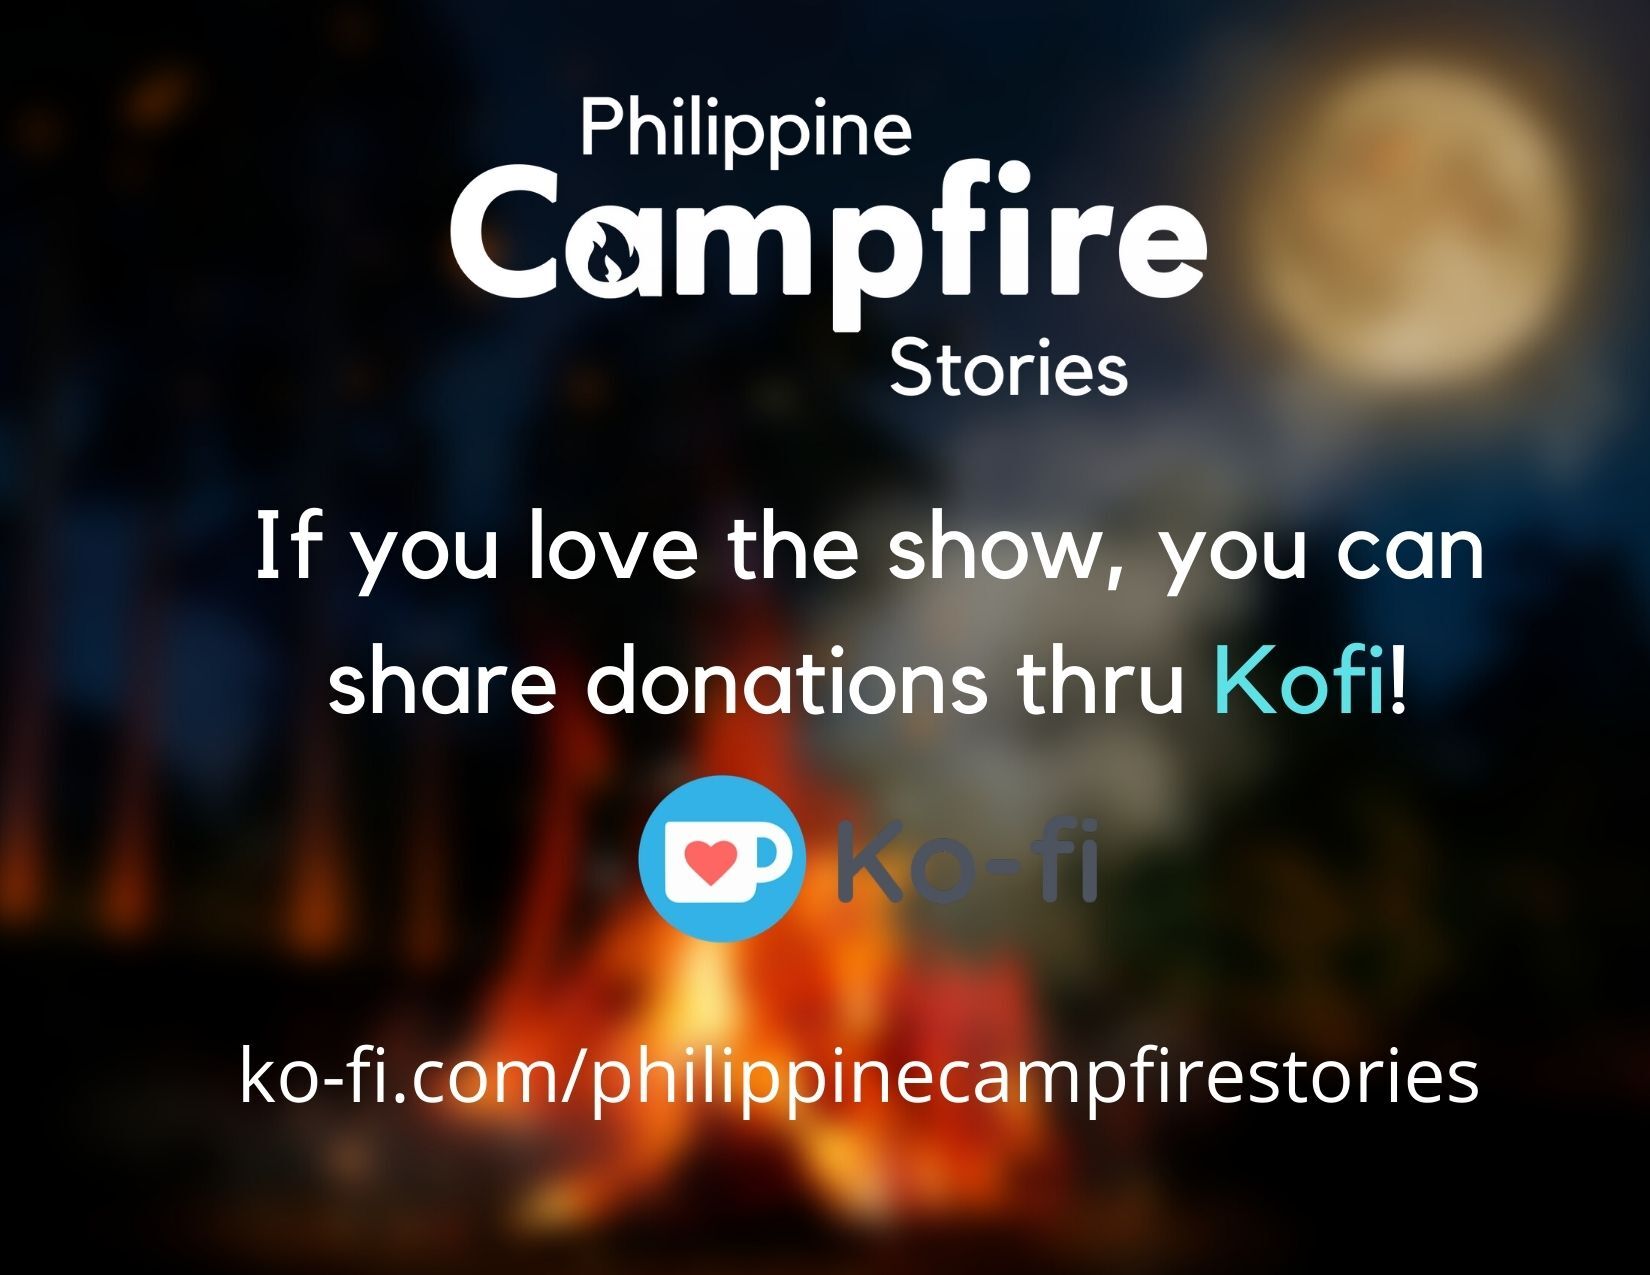 Support Philippine Campfire Stories via Kofi